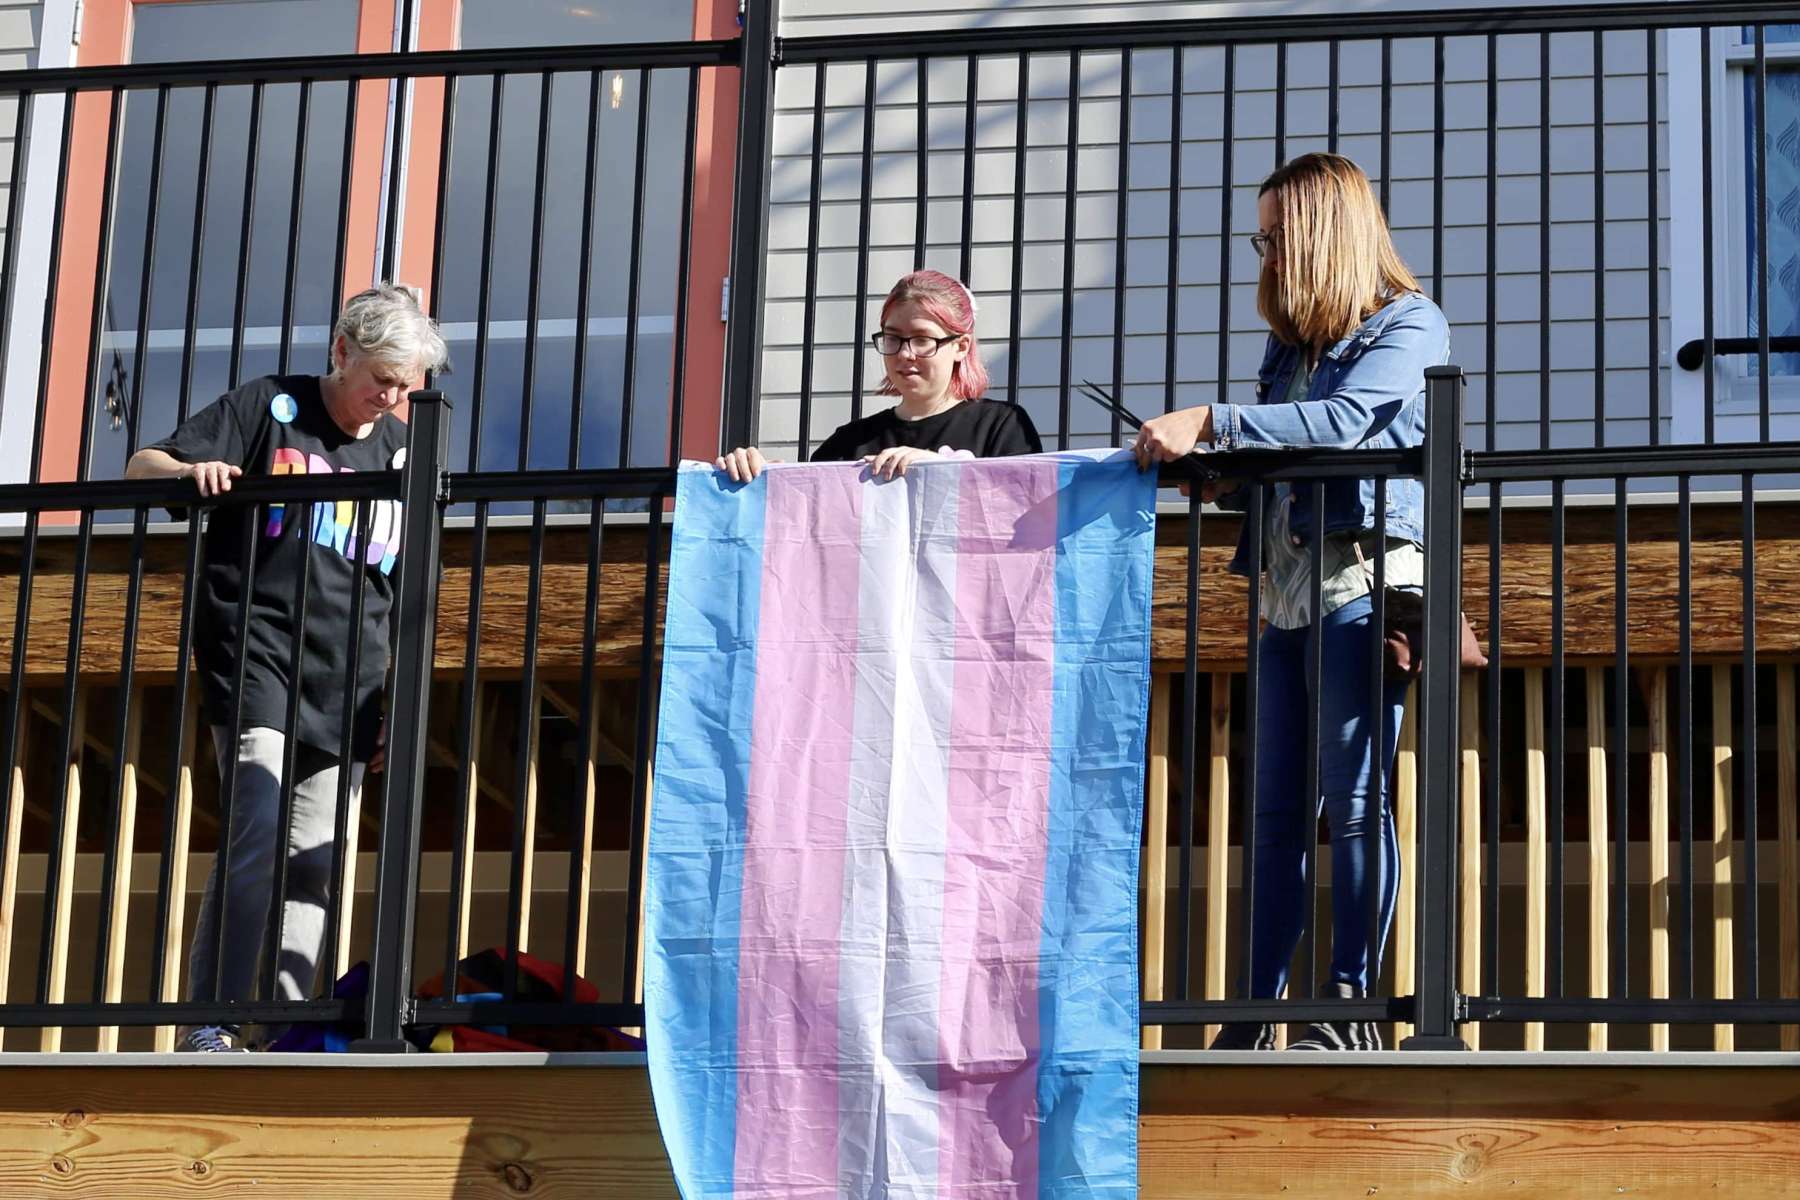 Rejecting discrimination: Rhode Island stands against anti-LGBTQ legislation